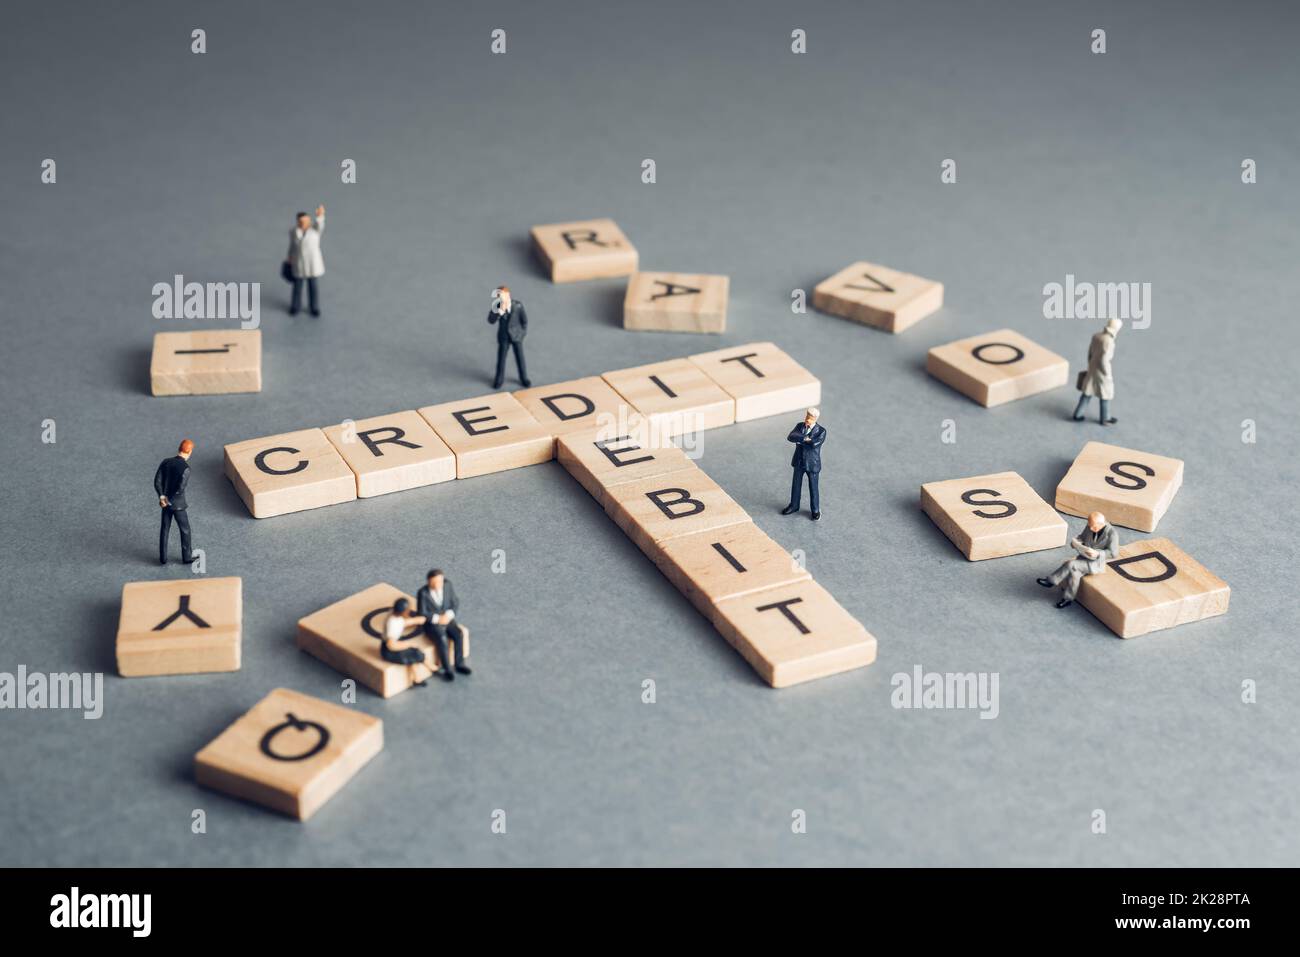 Kredit- und Debitkarte – Finanzbilanzkonzept Stockfoto